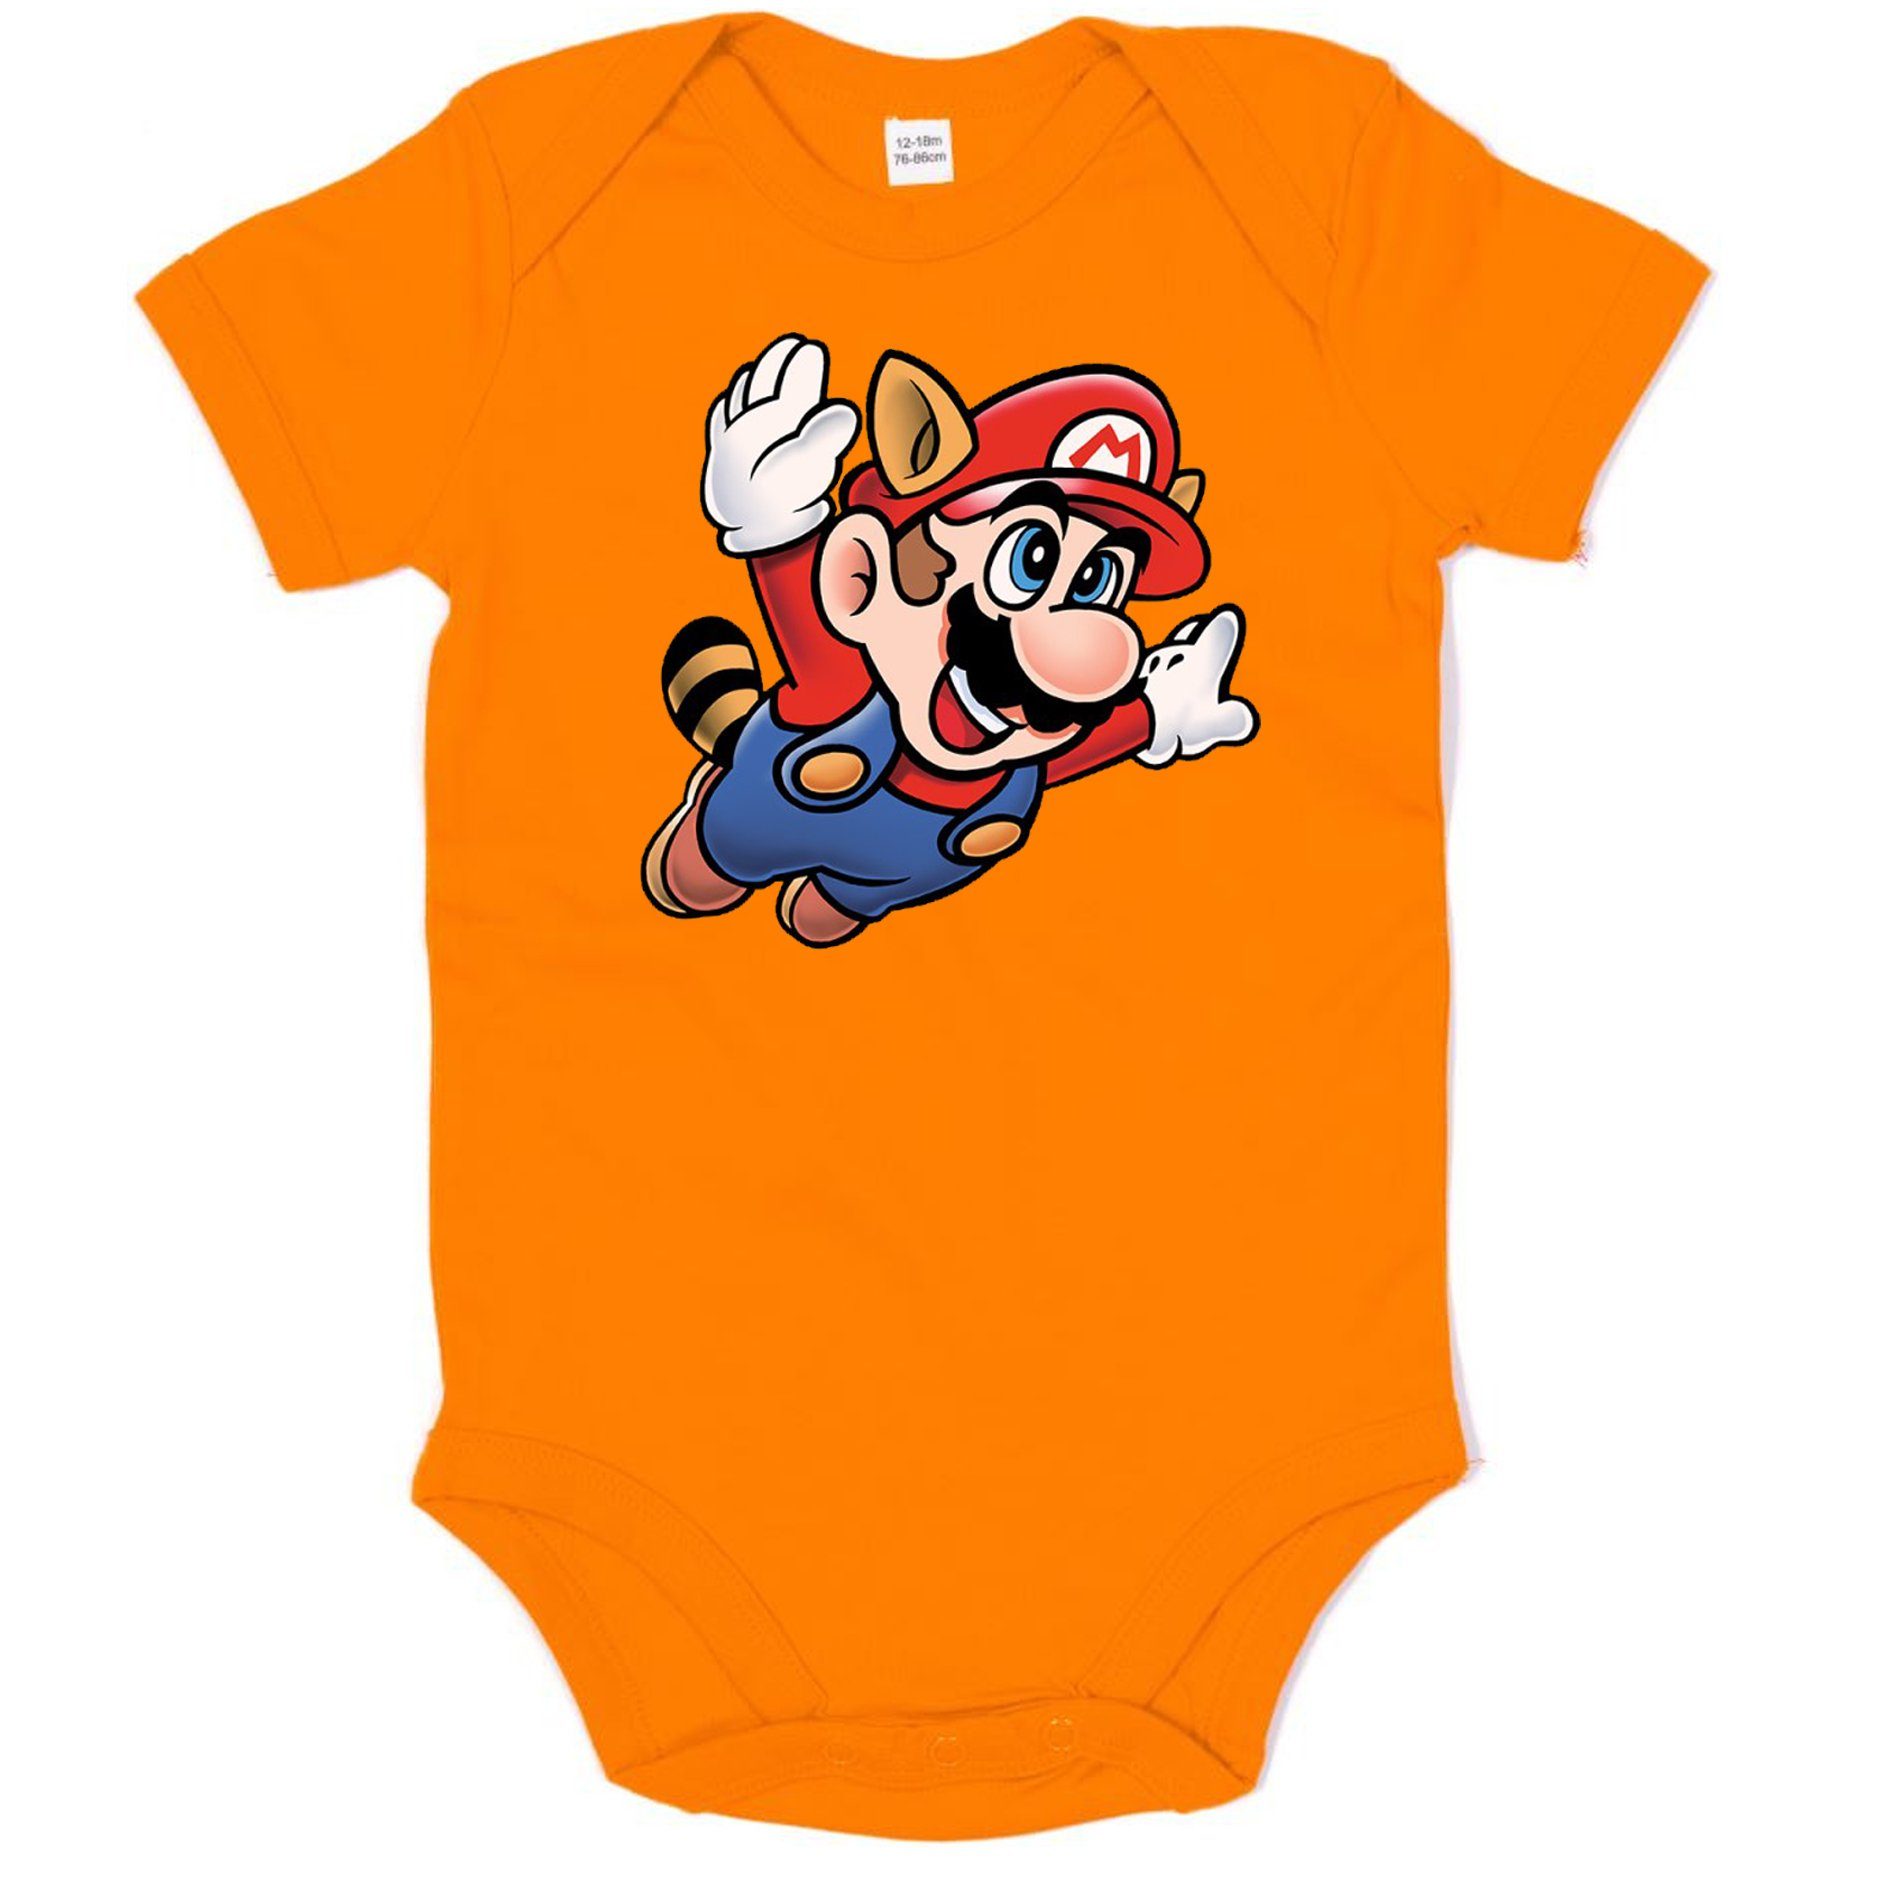 Blondie & Brownie Strampler Kinder Baby Super Mario 3 Fligh Nintendo Gamer Nerd Konsole Orange